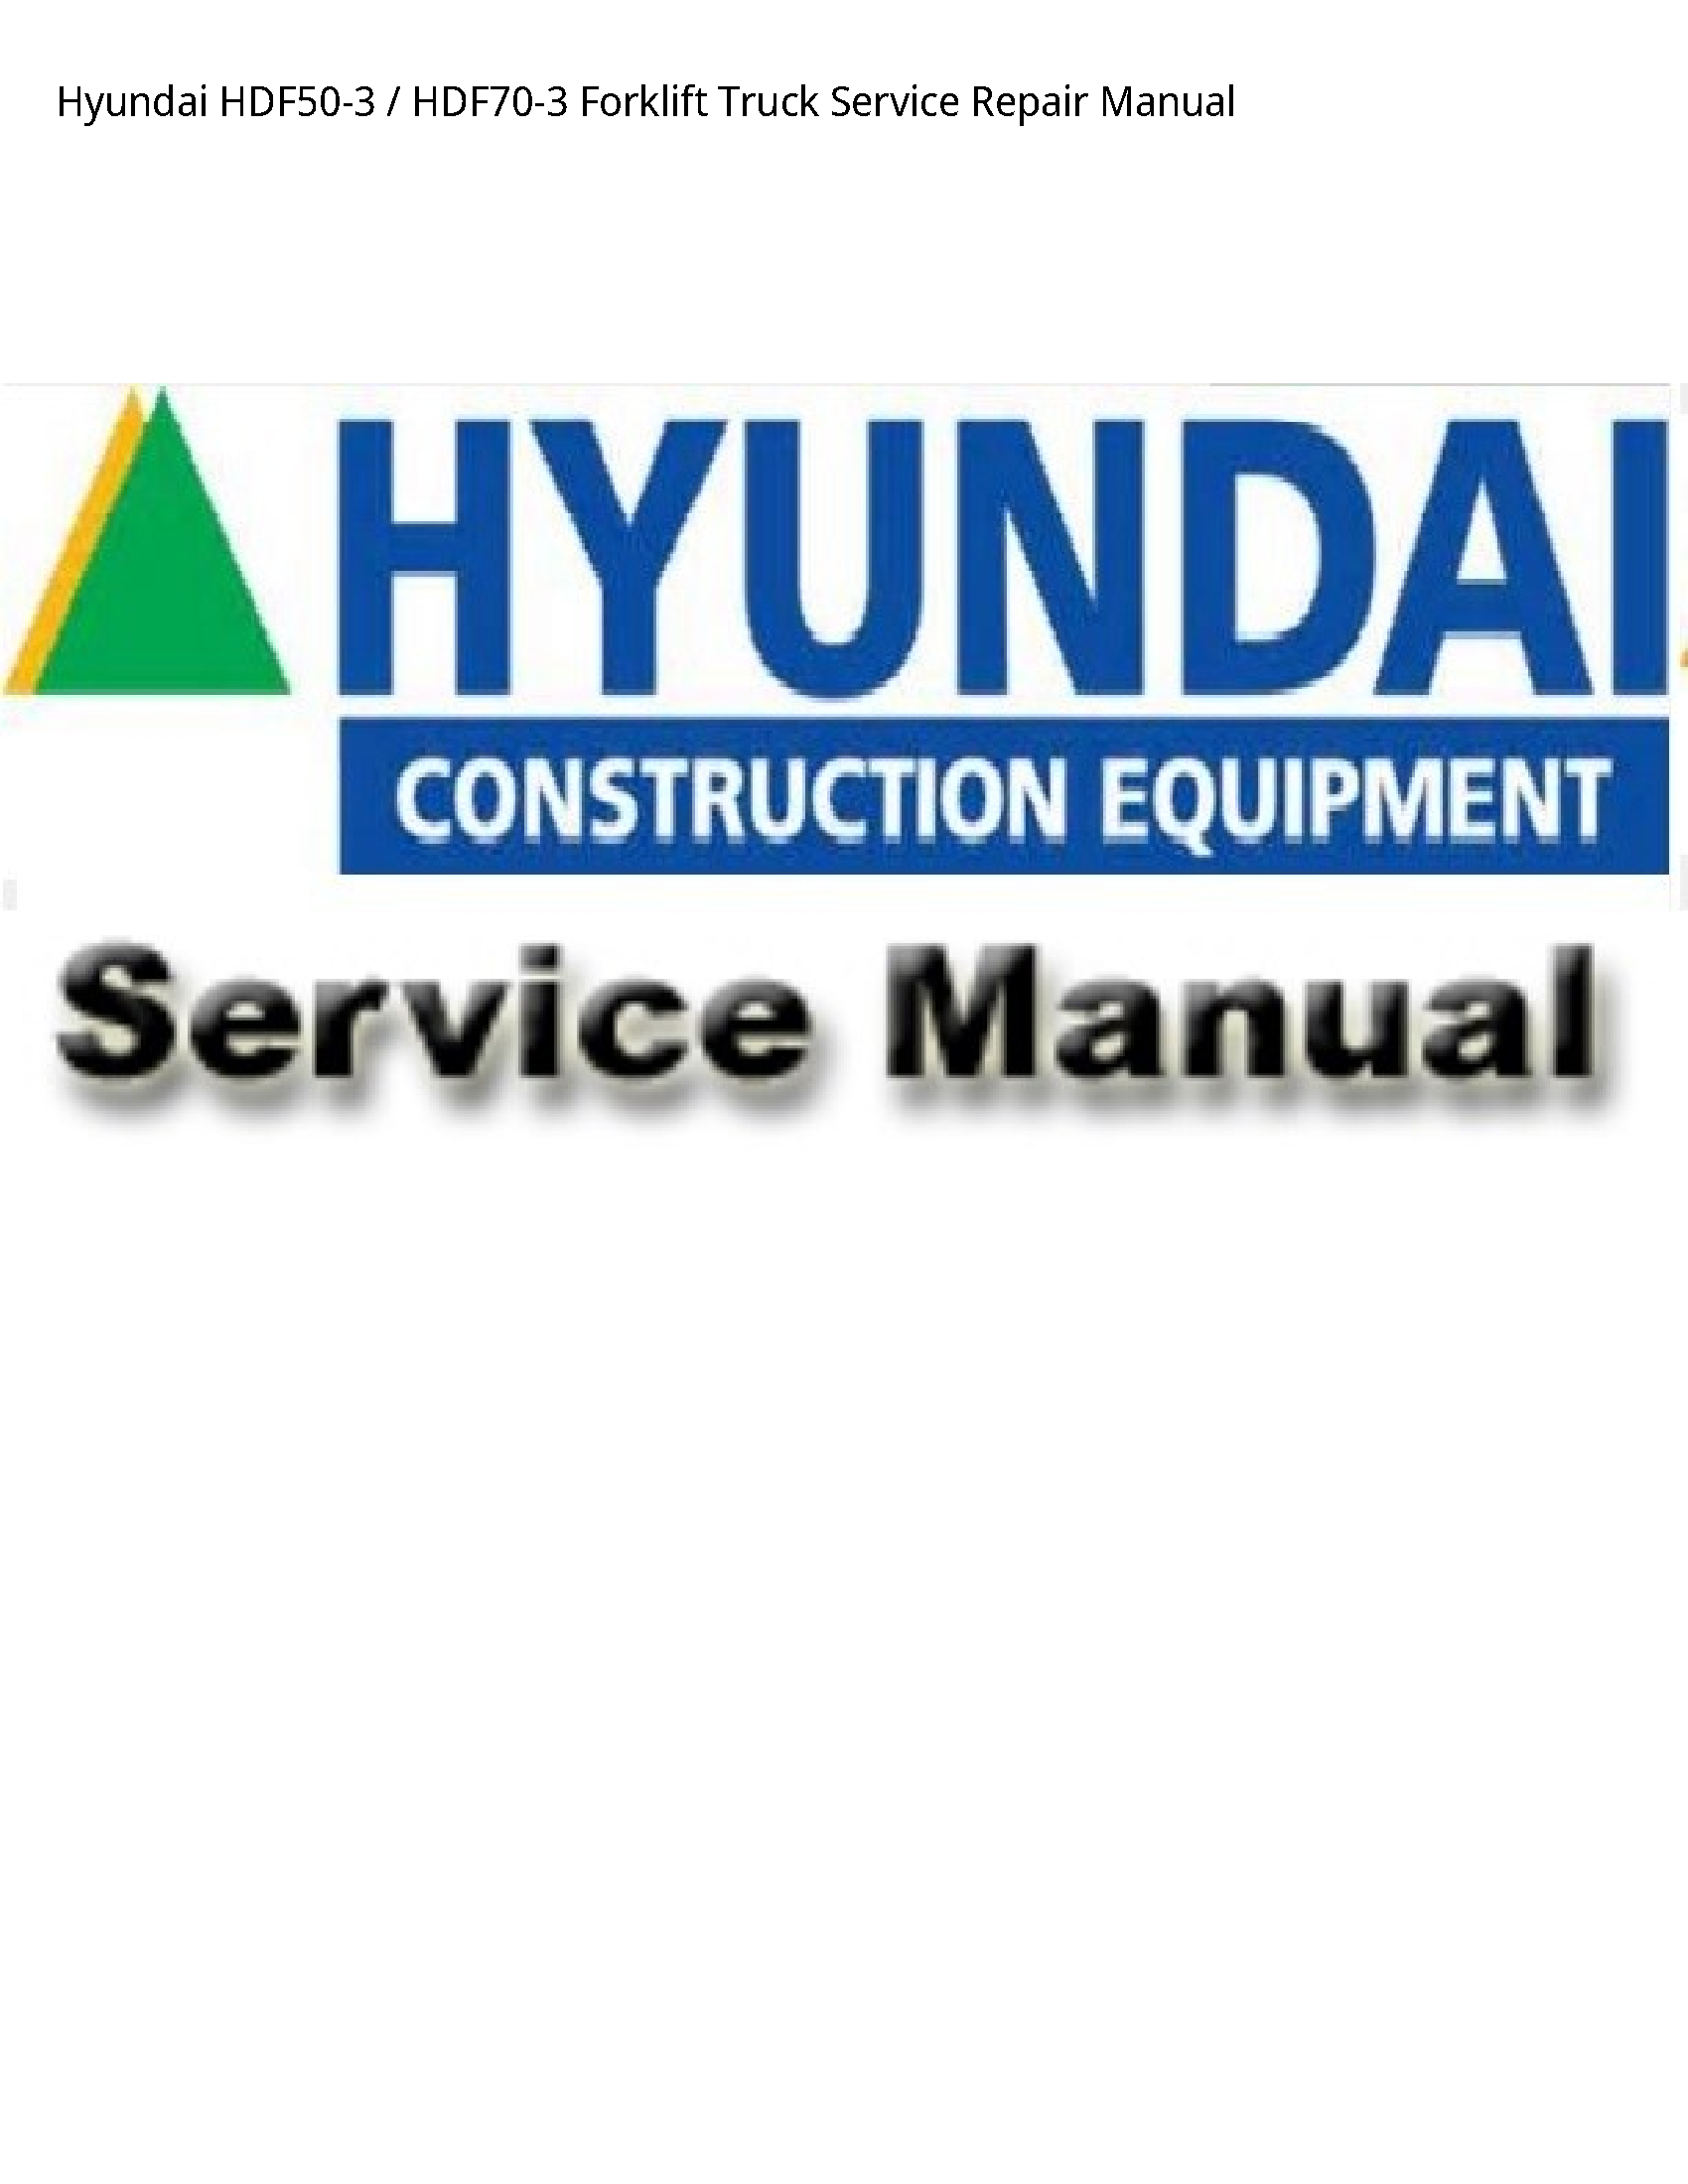 Hyundai HDF50-3 Forklift Truck manual